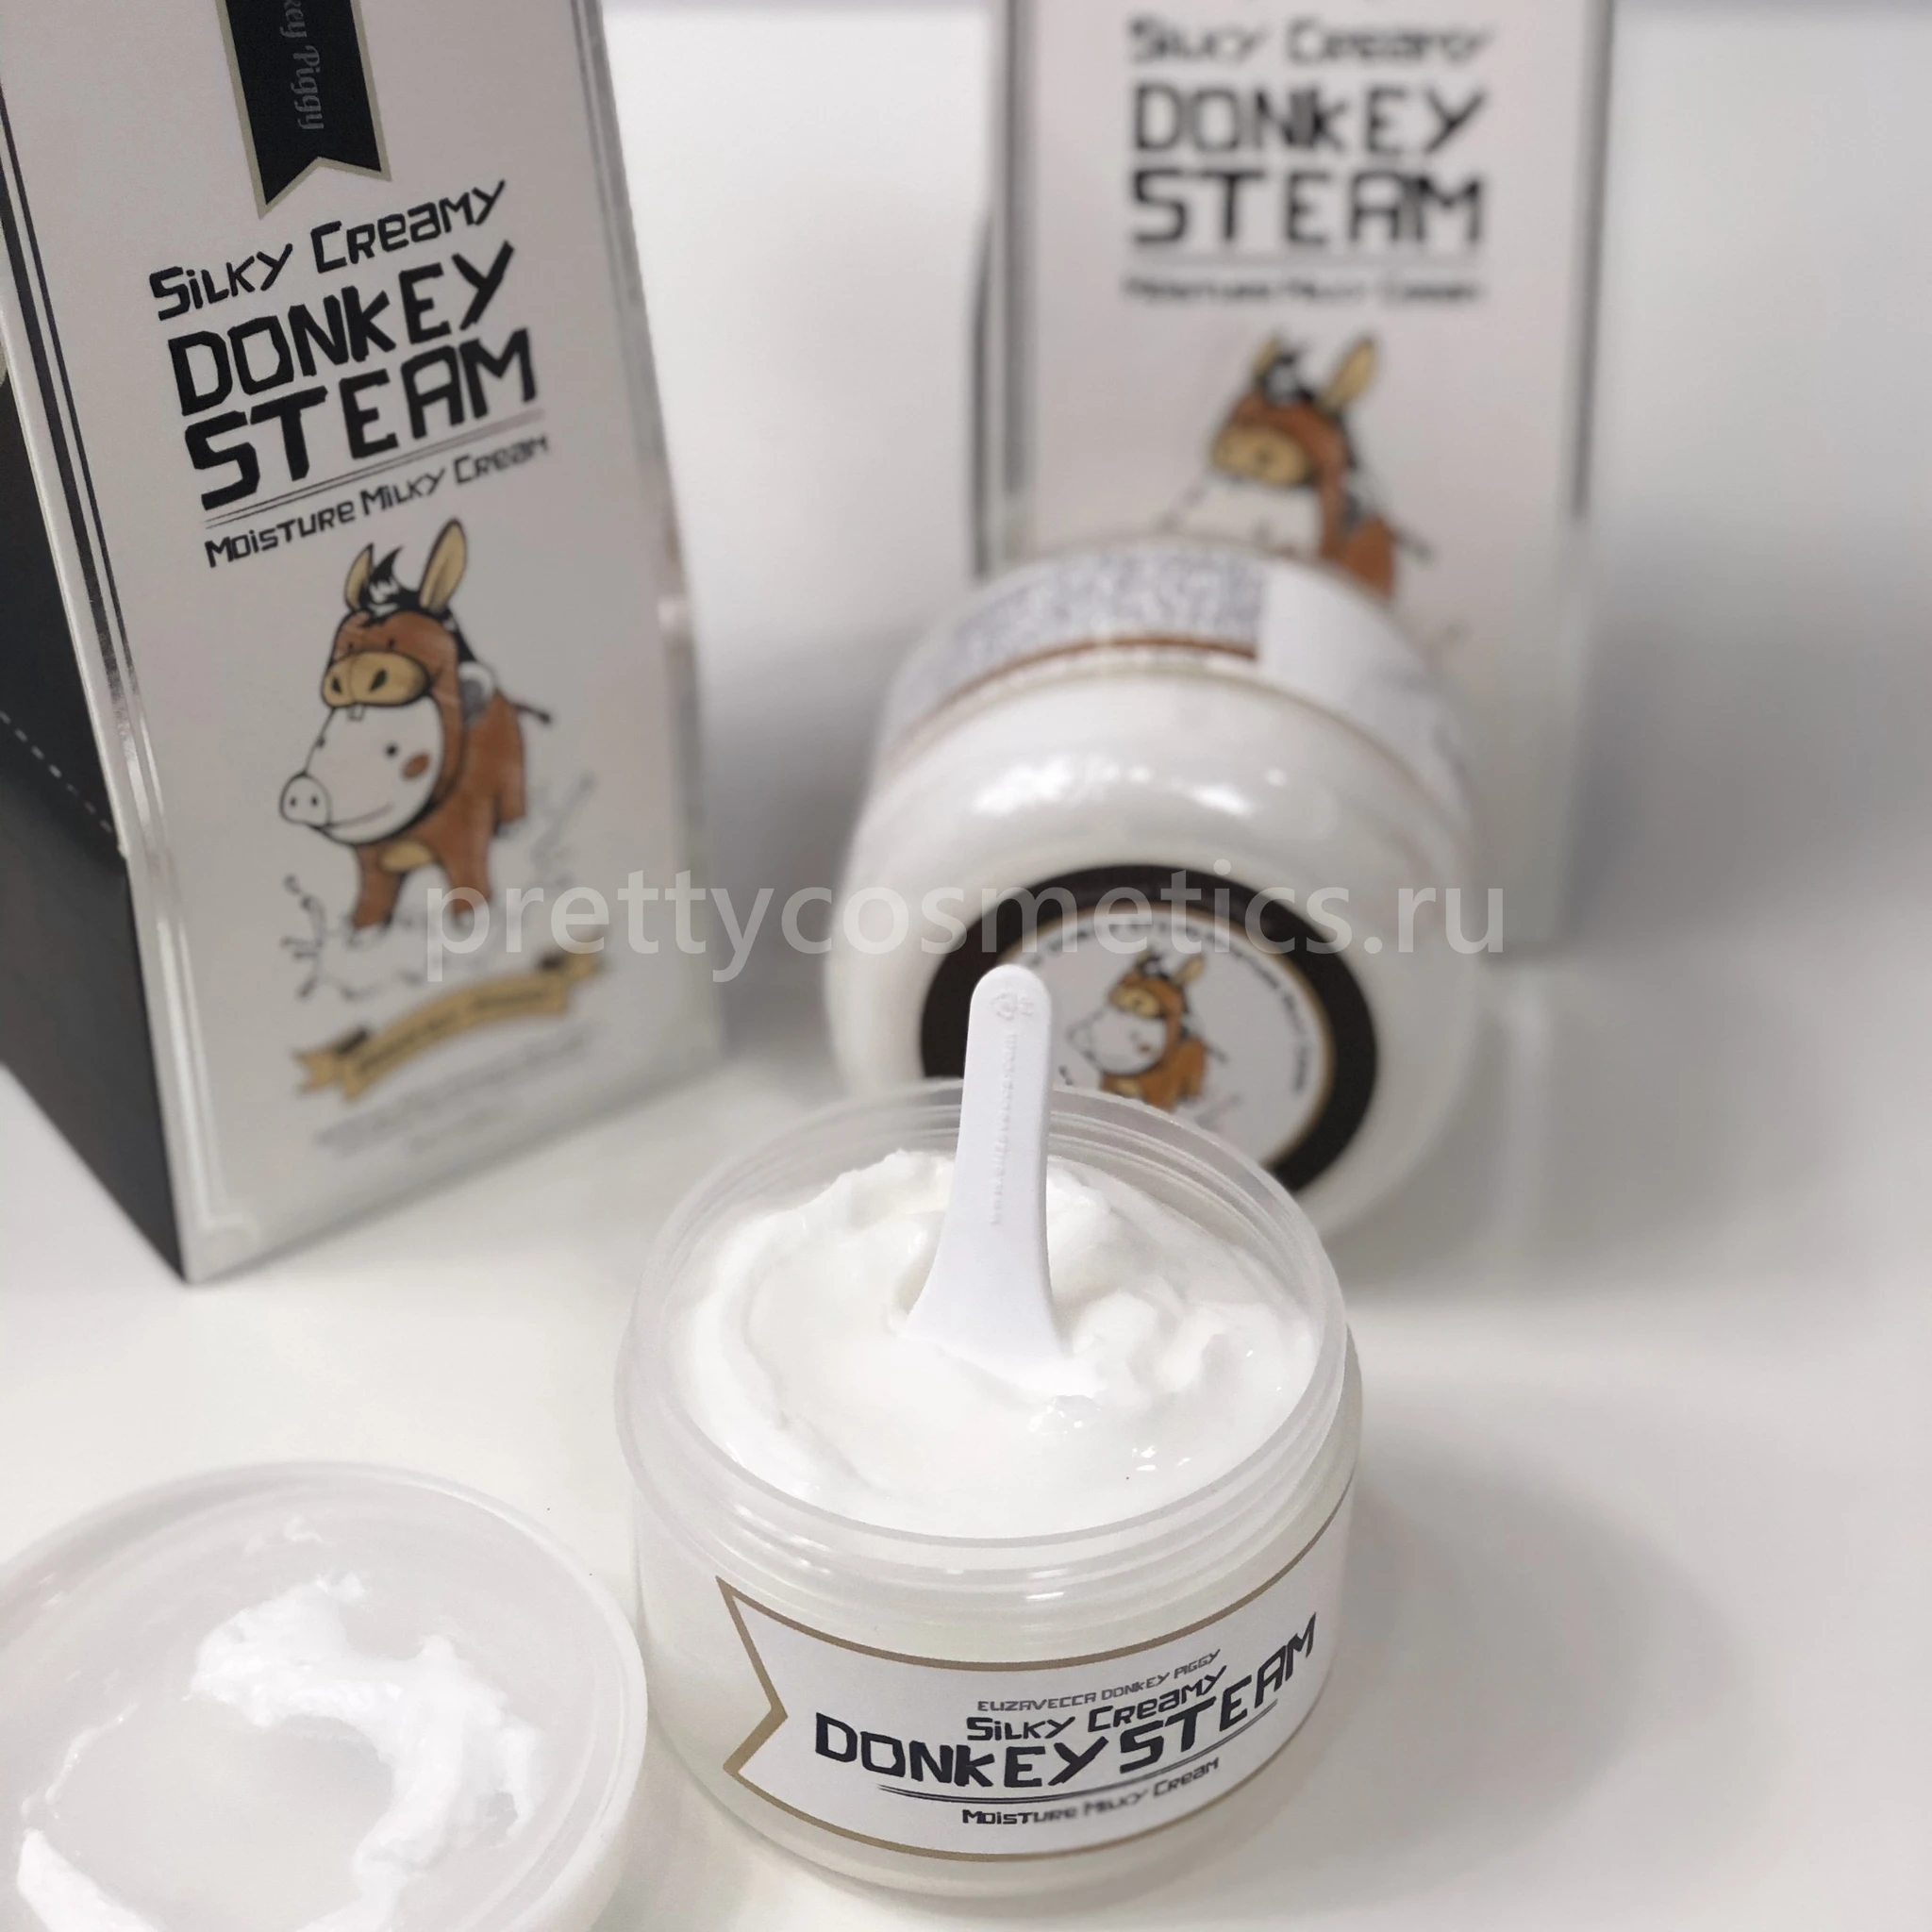 Silky creamy donkey steam moisture milky cream крем фото 30